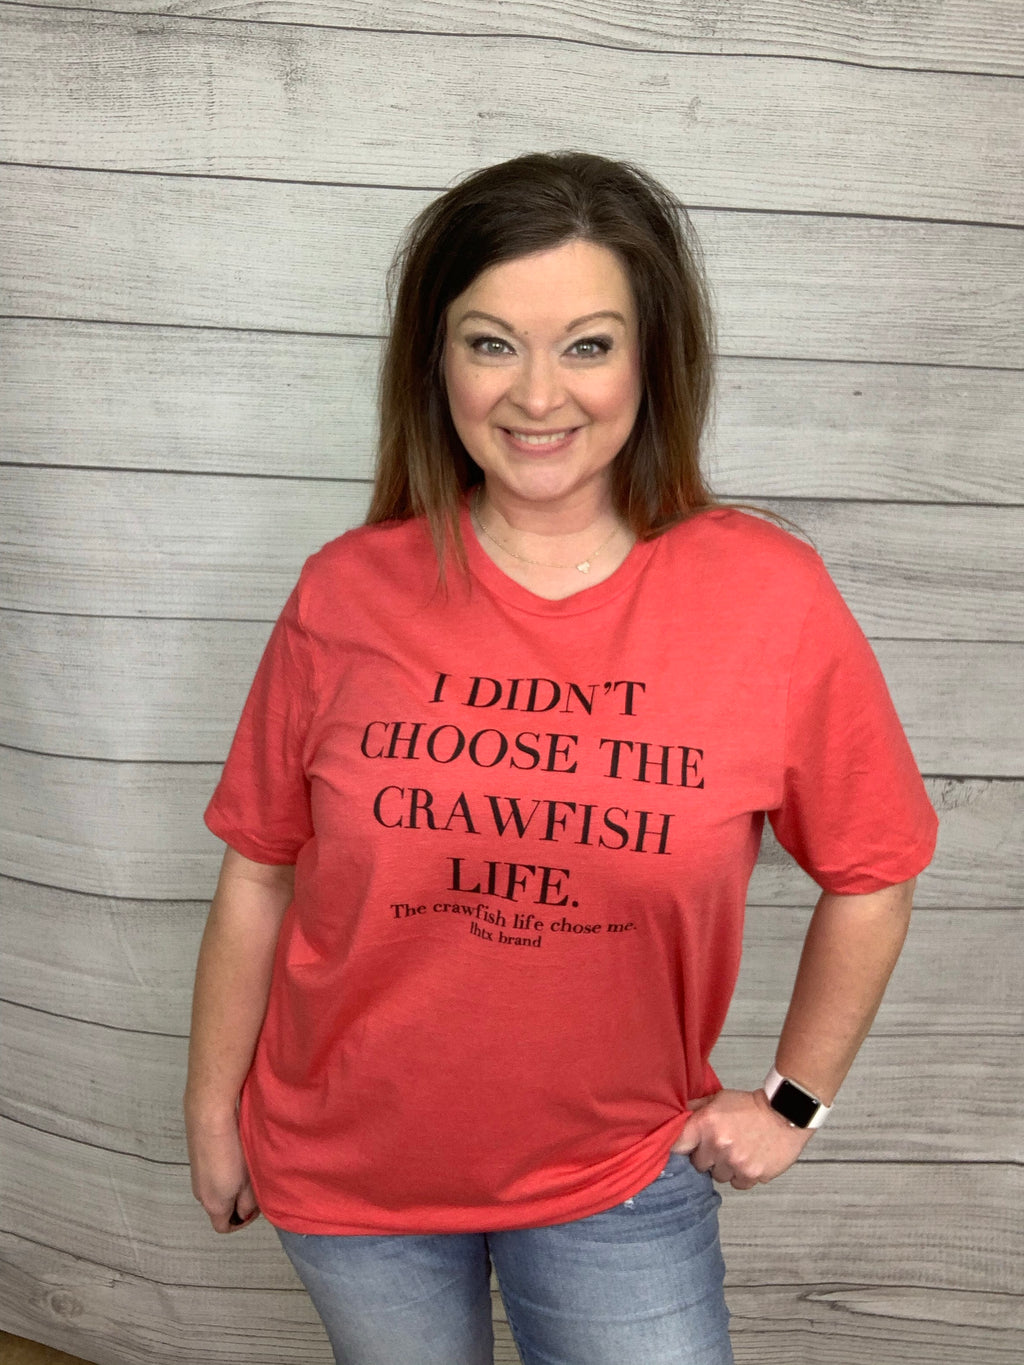 I didn't choose the crawfish life